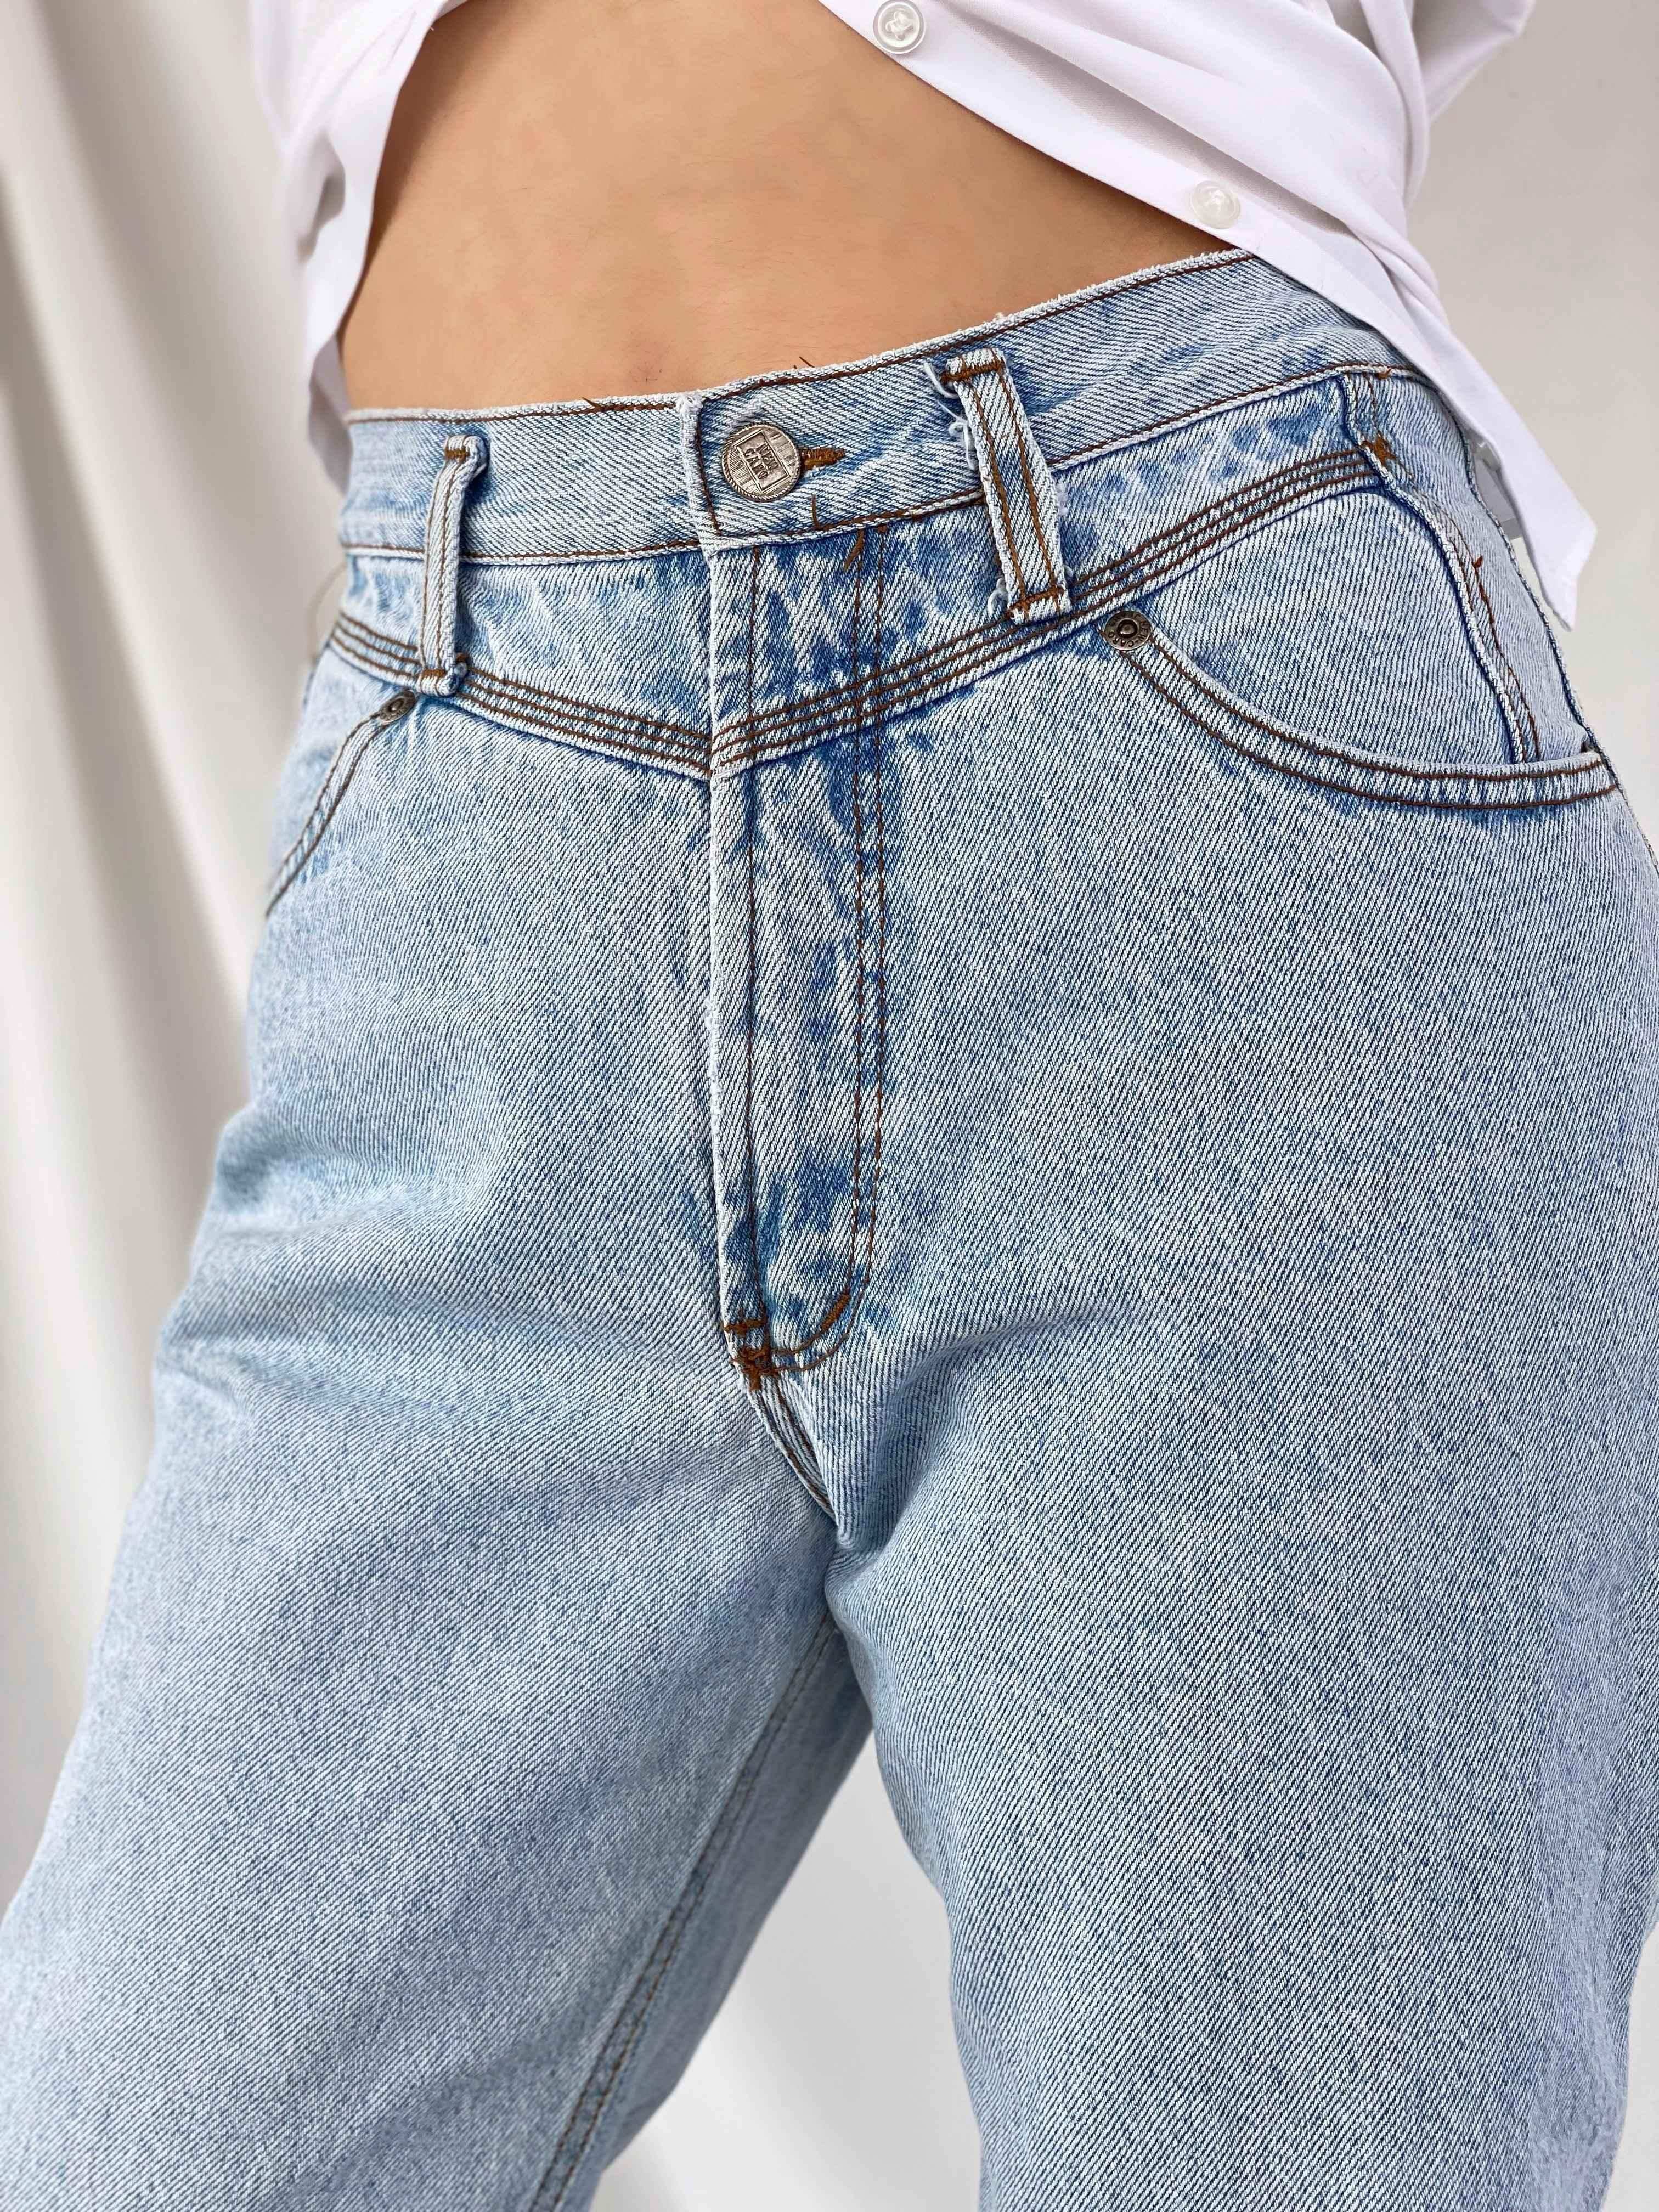 Vintage New Caro Jeans - Balagan Vintage Jeans jeans, vintage jeans